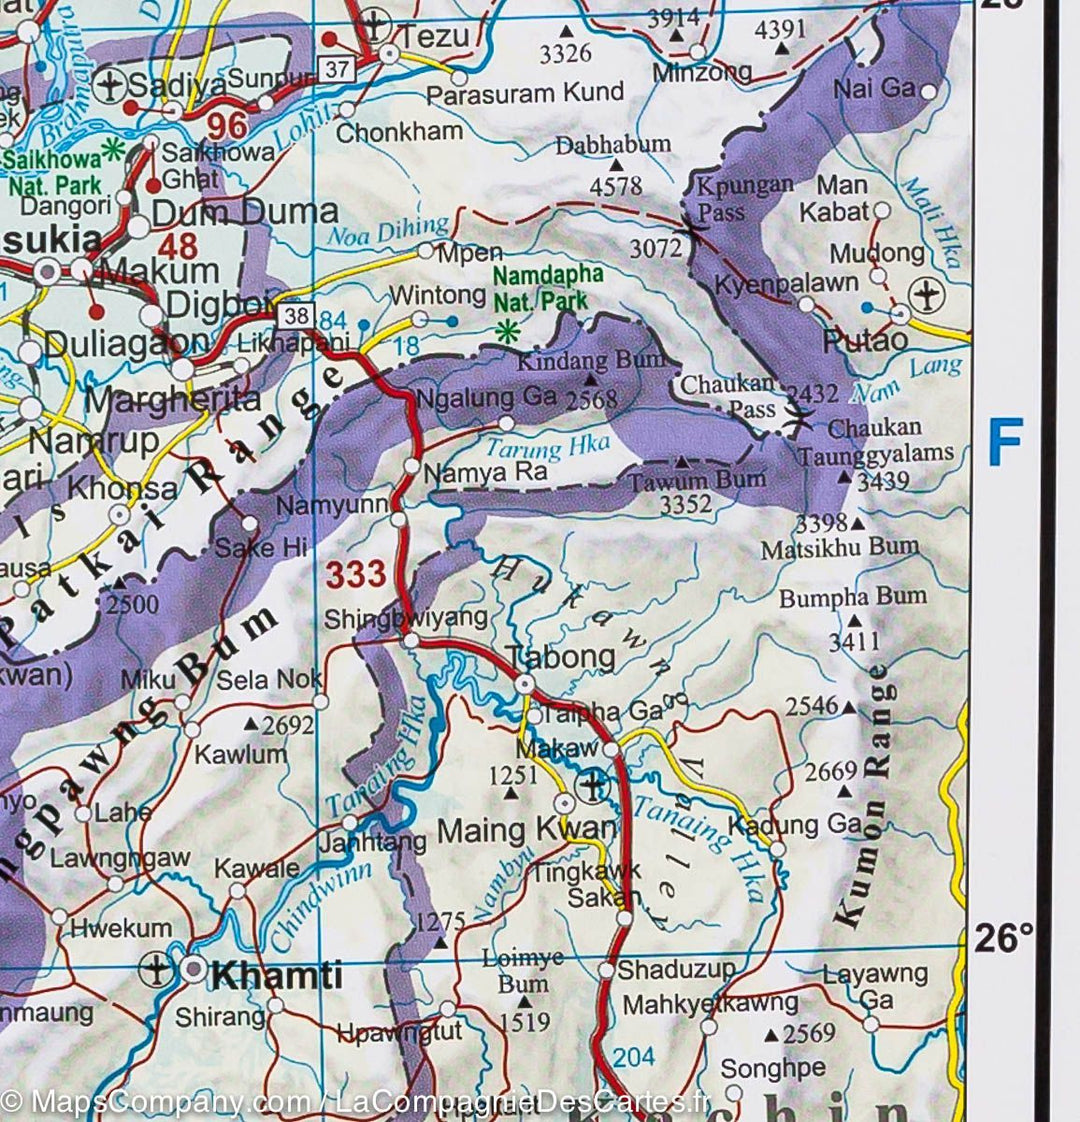 Carte routière &#8211; Inde, Bhoutan, Bangladesh, Népal, Maldives &#038; Sri Lanka | Gizi Map - La Compagnie des Cartes